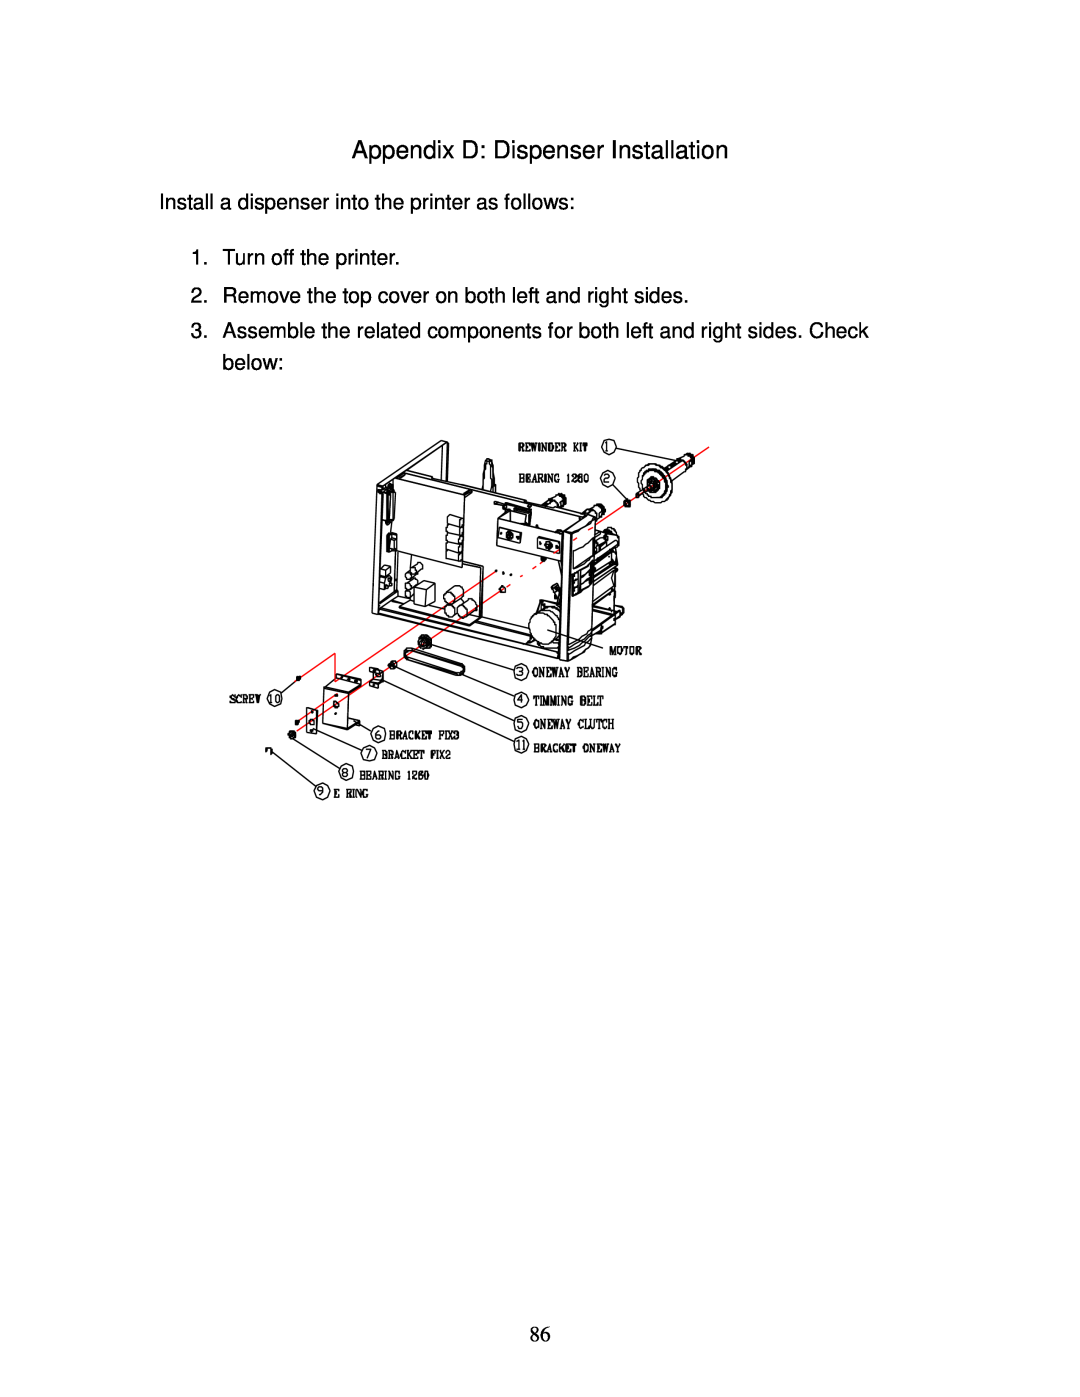 AMT Datasouth 4600 manual Appendix D Dispenser Installation, Install a dispenser into the printer as follows 